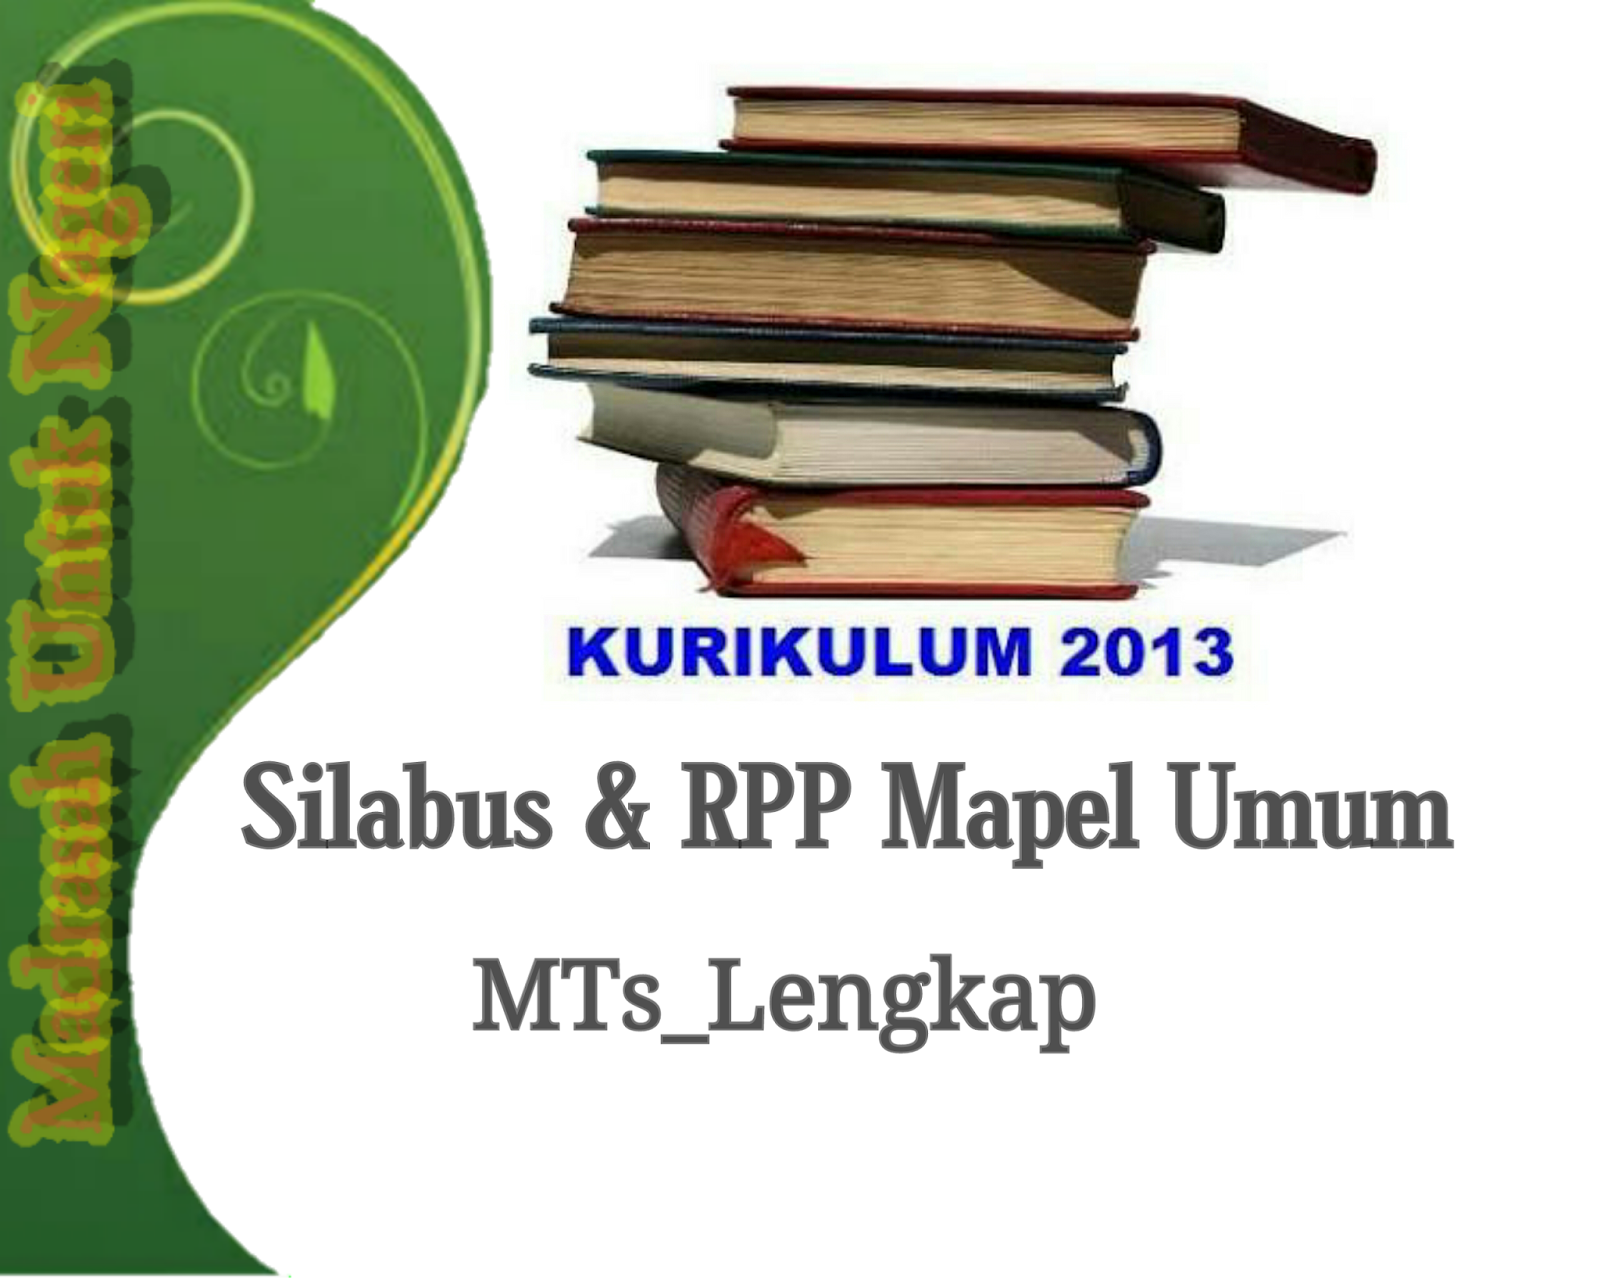 Download Silabus dan RPP Kurikulum 2013 Mata Pelajaran Umum untuk Jenjang Madrasah Tsanawiyah MTs lengkap untuk semua tingkat Kelas yang kami bagikan